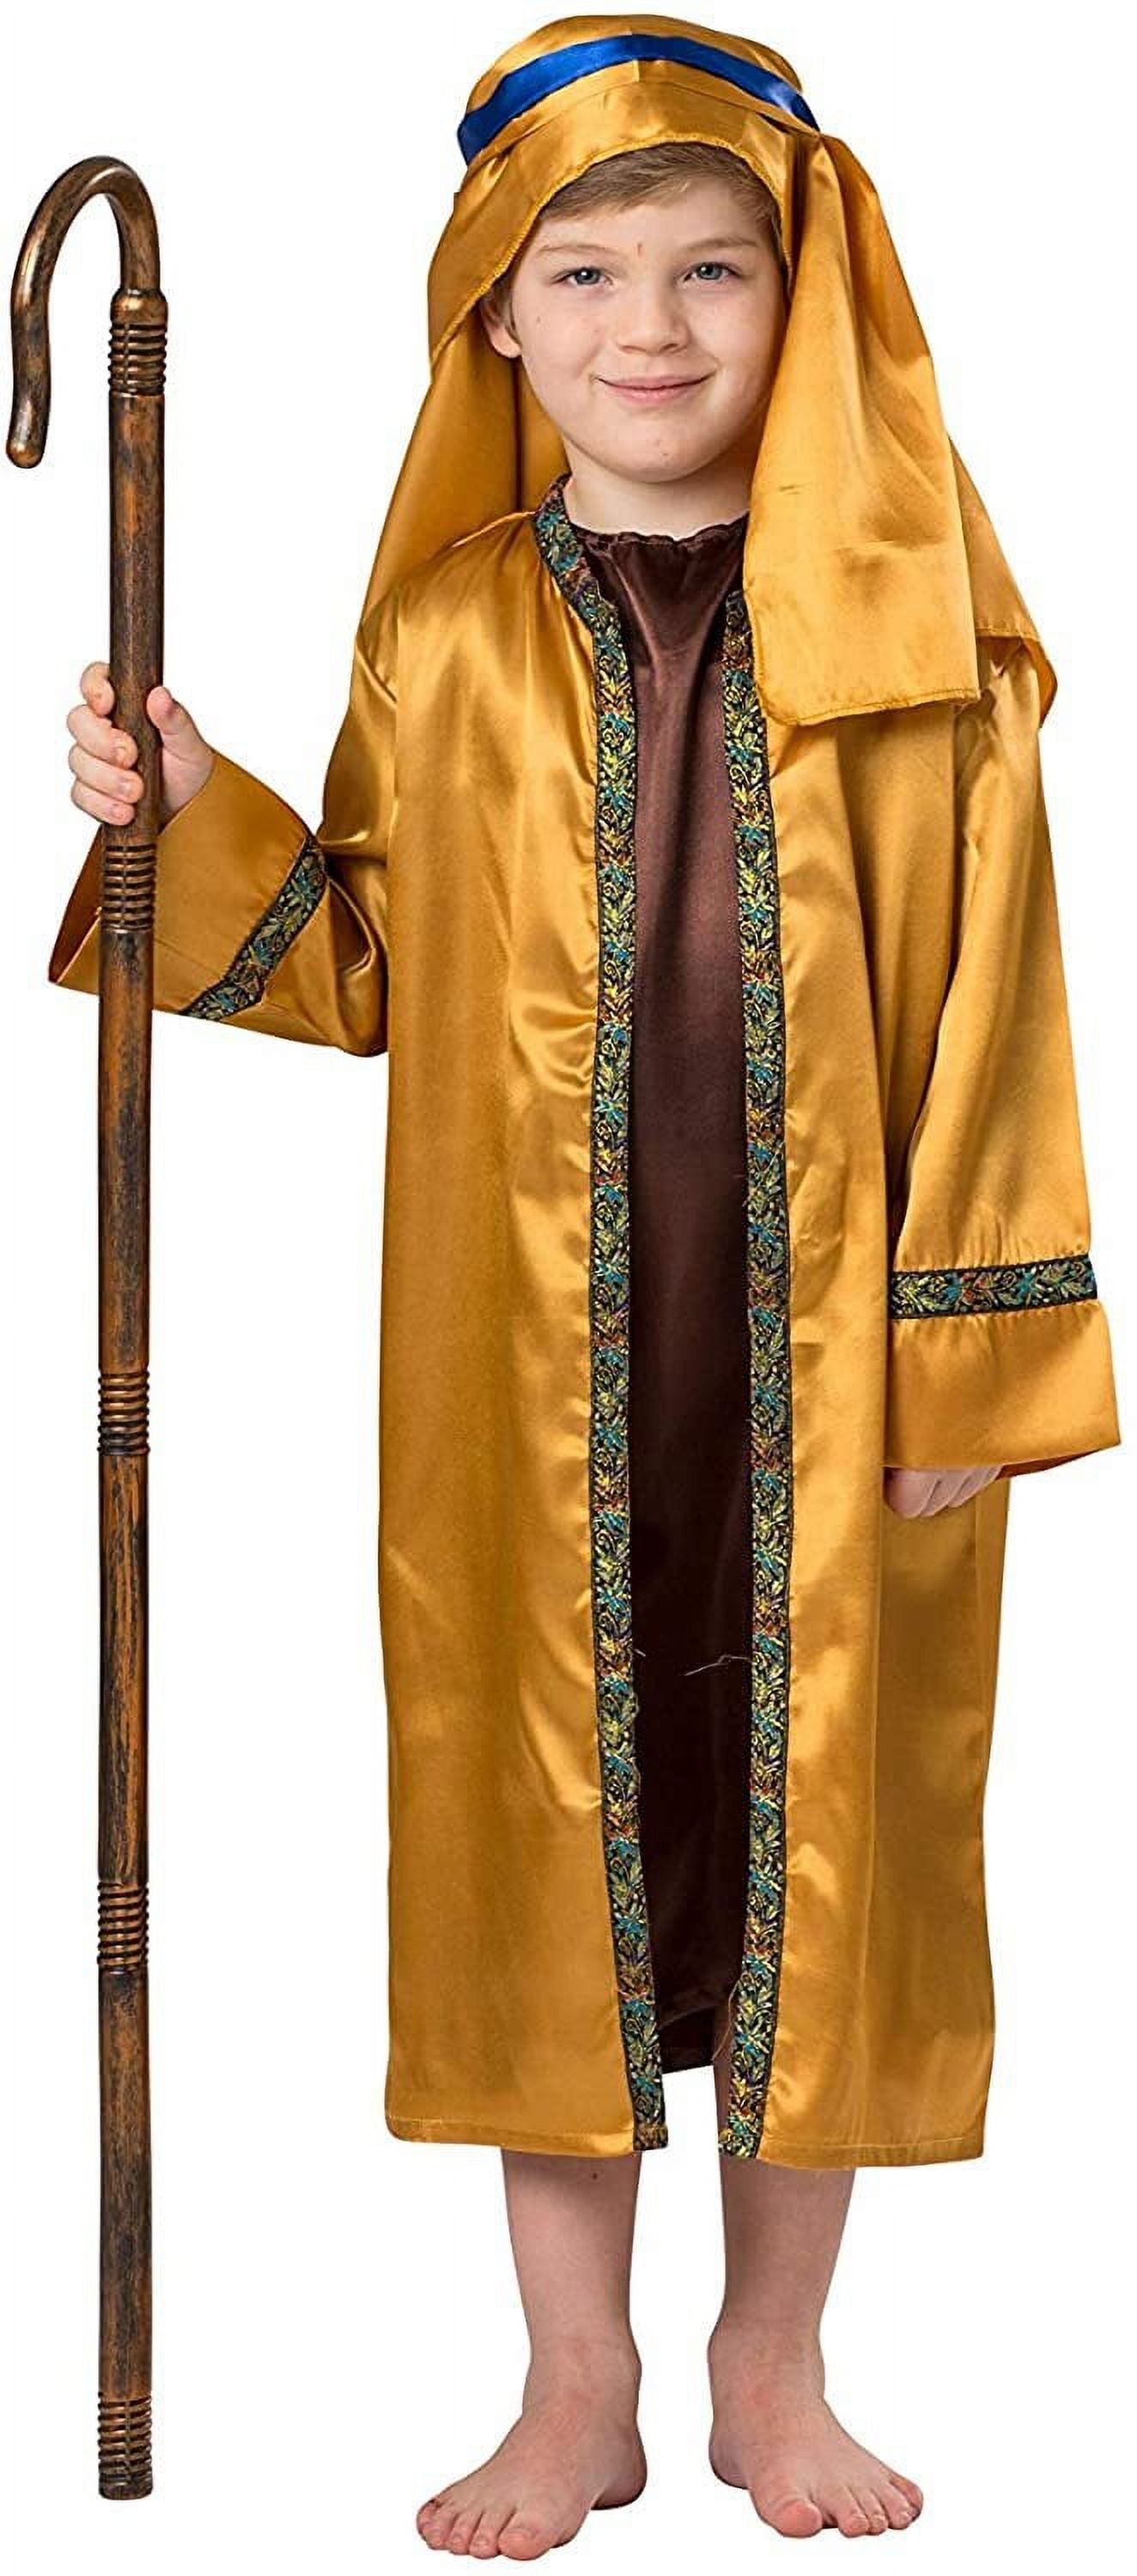 Dress-Up-America Shepherd Costume for Kids - Biblical Costume Set for Boys  - Brown And Gold Shepherds Dress Up for Children